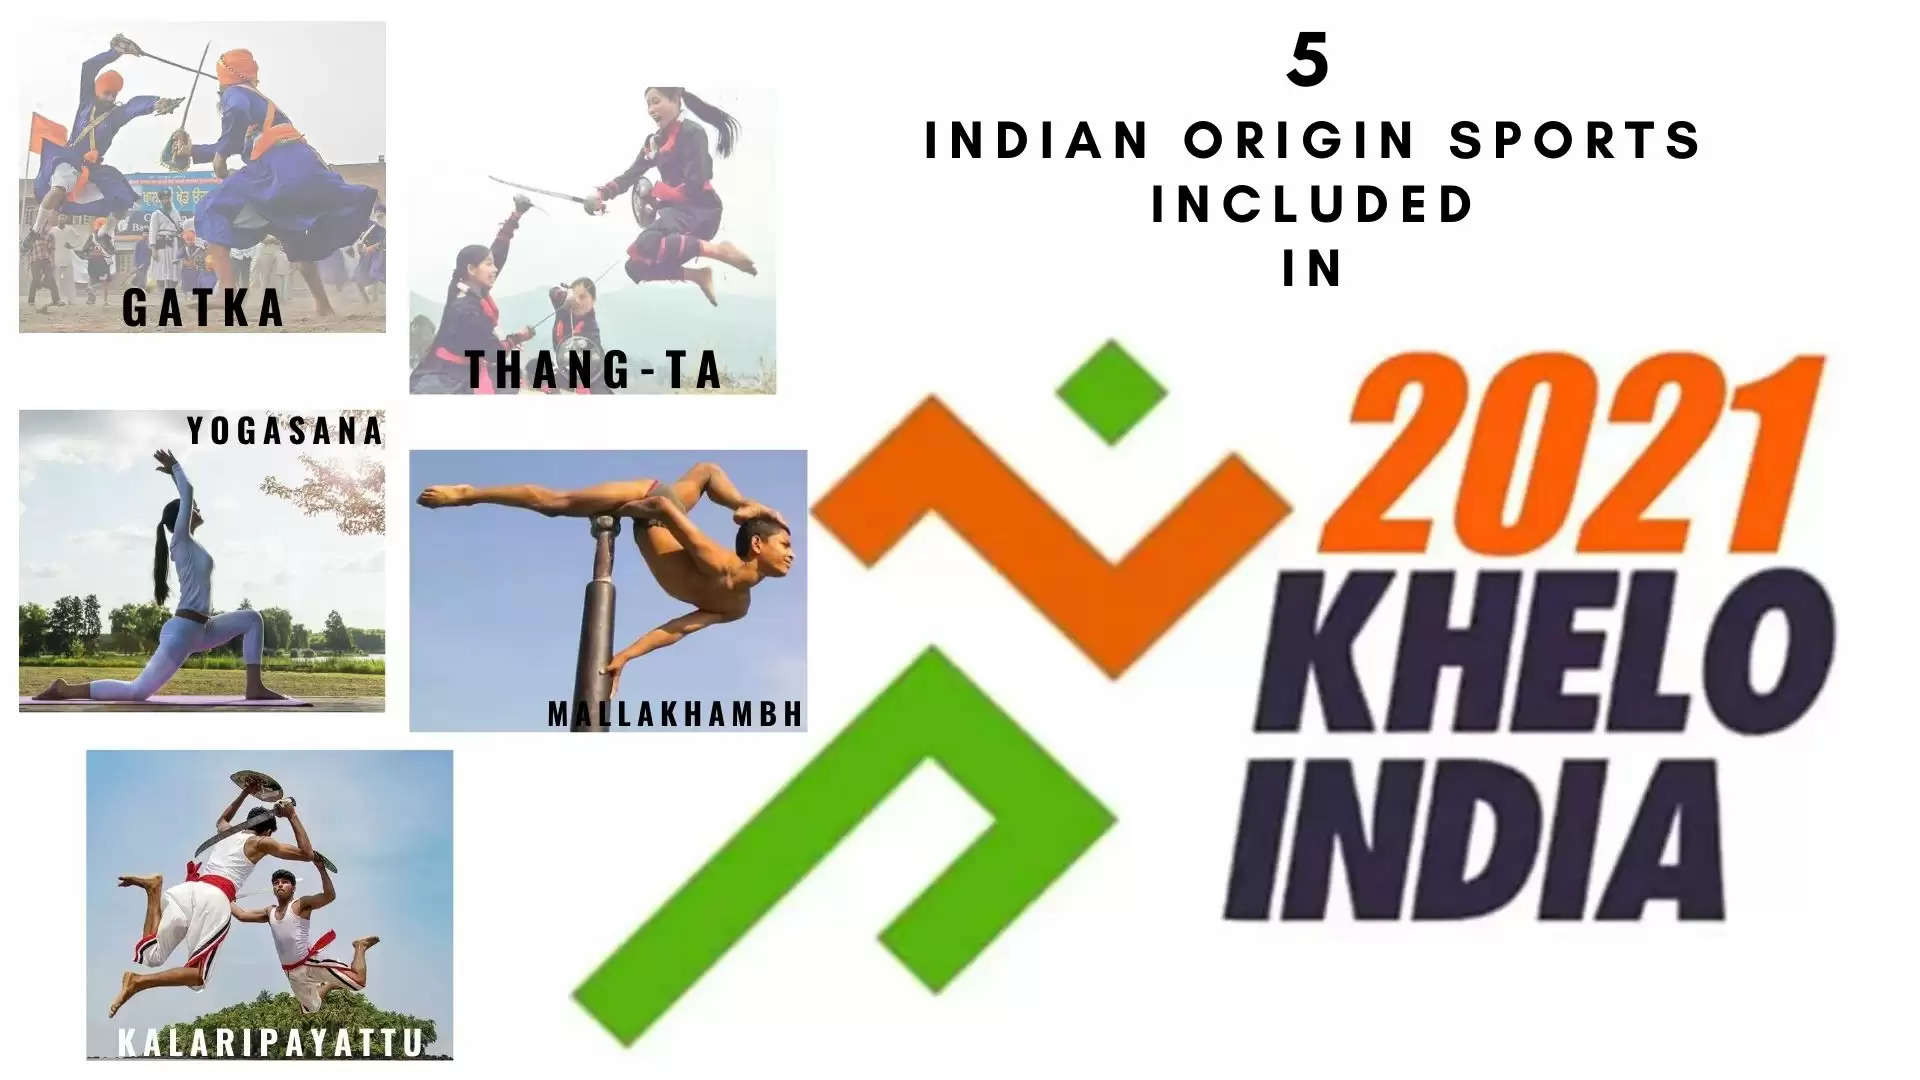 5 Indian Origin Sports in Khelo India 2022 Yoga Kalaripayattu Mallakhambha Gatka Thang-Ta